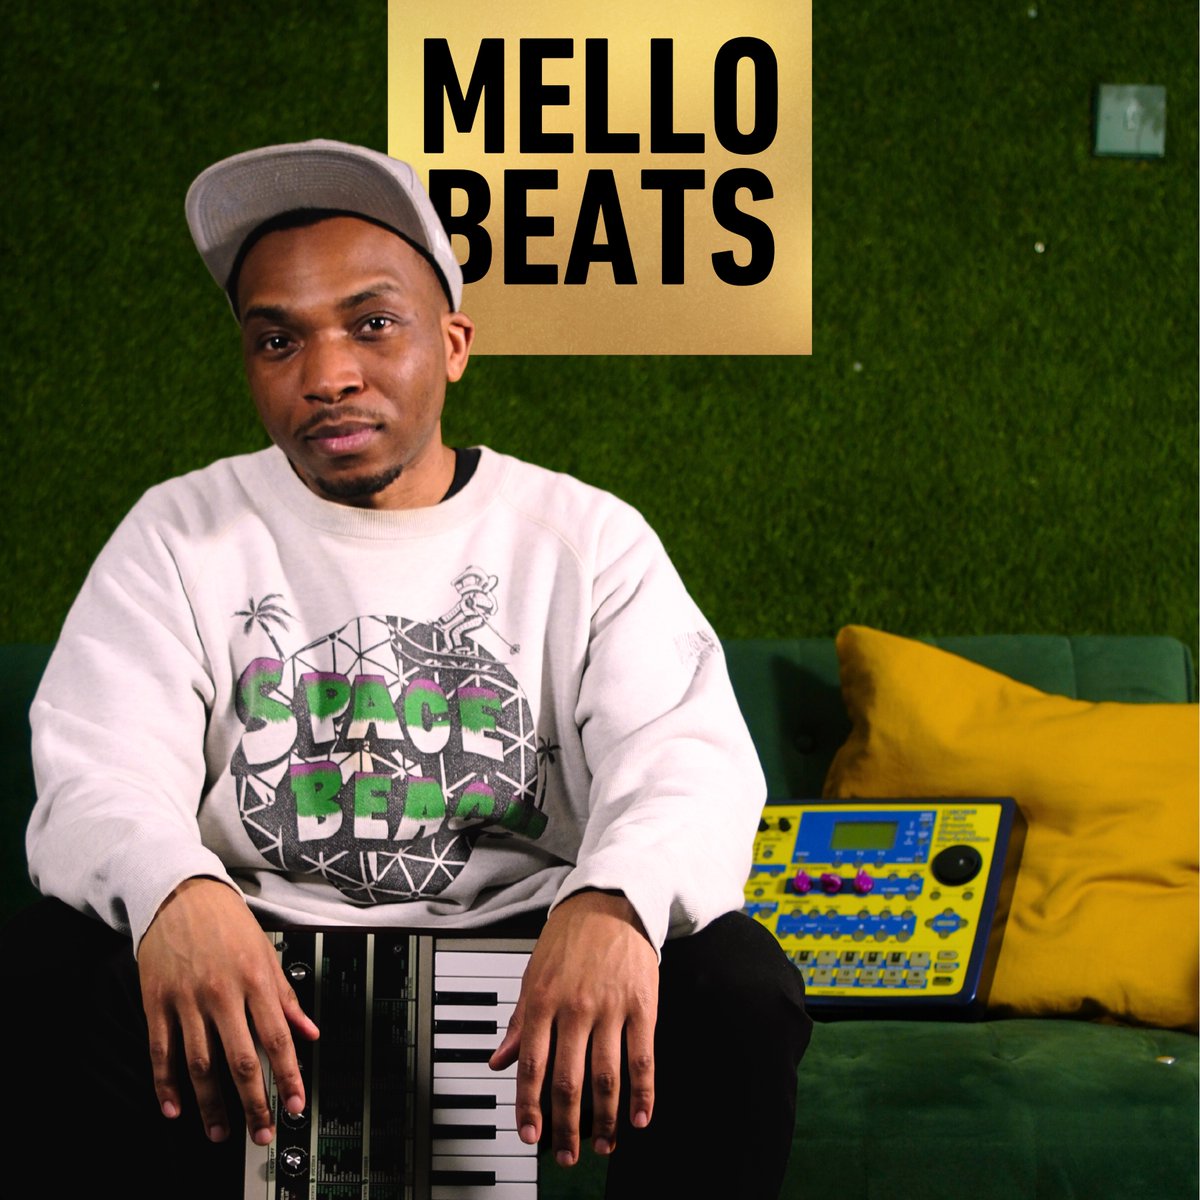 Mello Beats | Spotify Playlist ow.ly/q7sr50RhvGP feat. Fr1th, @Elaquent, Mndsgn, @ApolloBrown, @knxwledge, Ras G, @CalvinValentine, Tall Black Guy, @darealdibiase, @marcopolobeats, @El_Michels Thes One, @OlBurgerBeats, @surprise_chef, @flofilz +